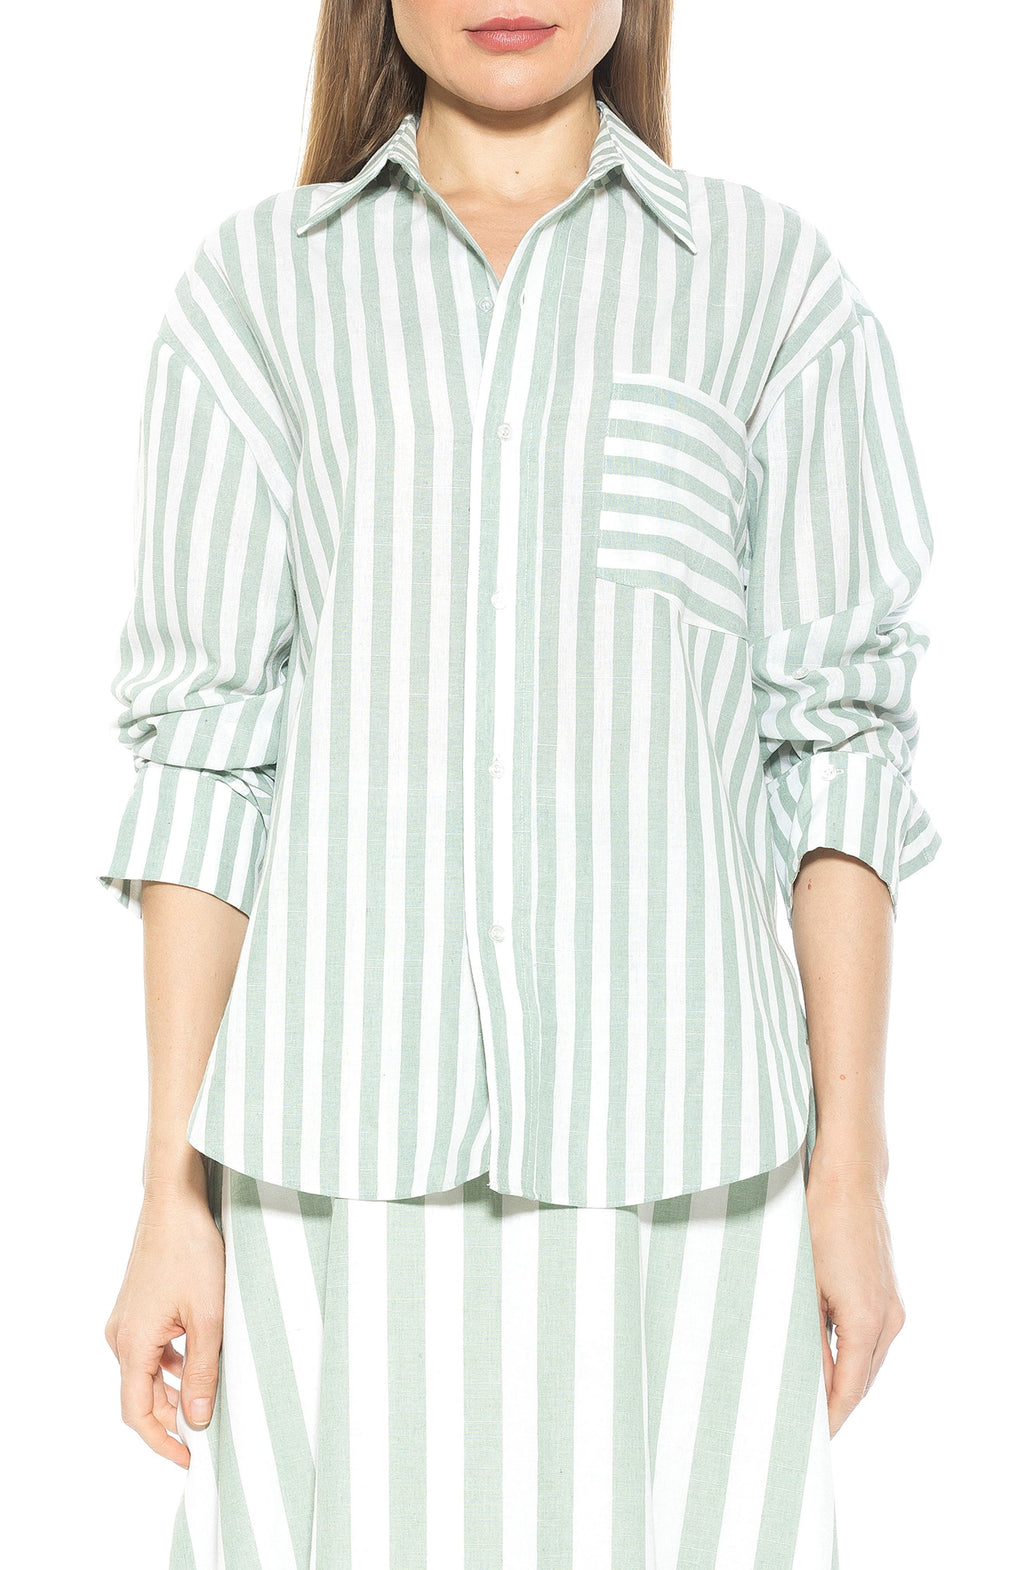 Alexia Admor Tammi Oversize Stripe Boyfriend Button-Up Shirt, Main, color, Green Stripe